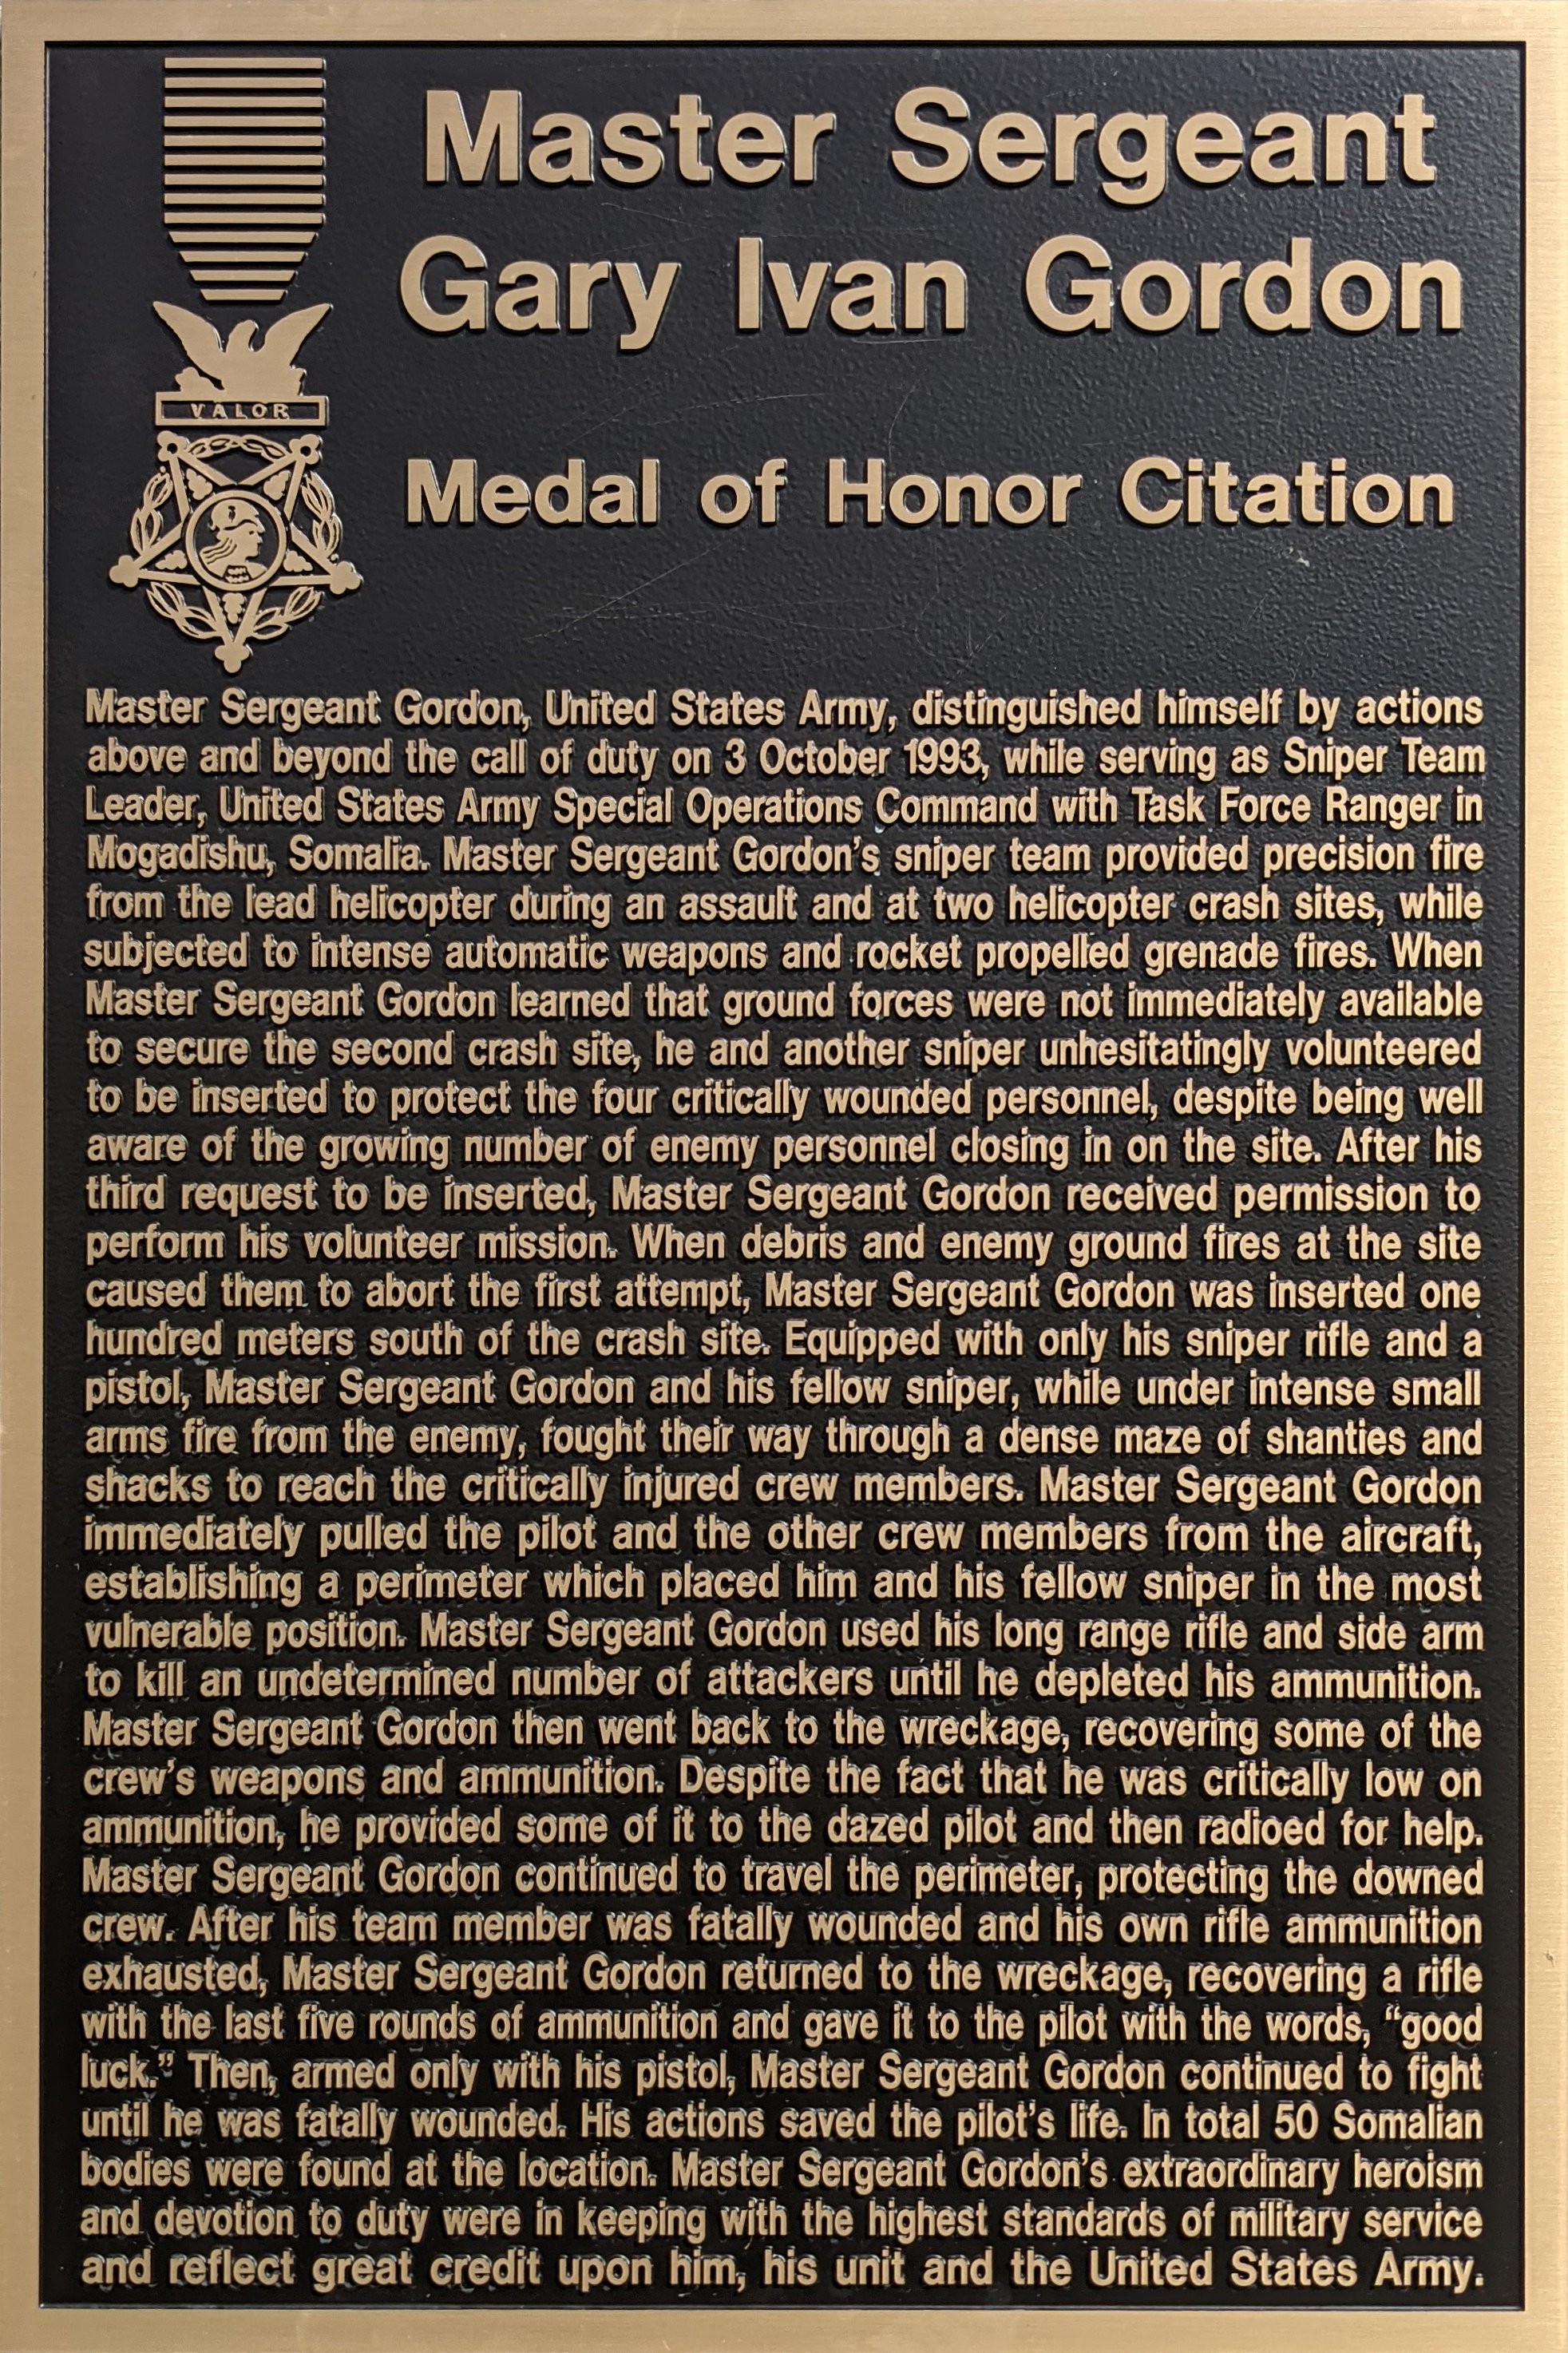 MSG Gary Gordon's Metal of Honor citation plaque